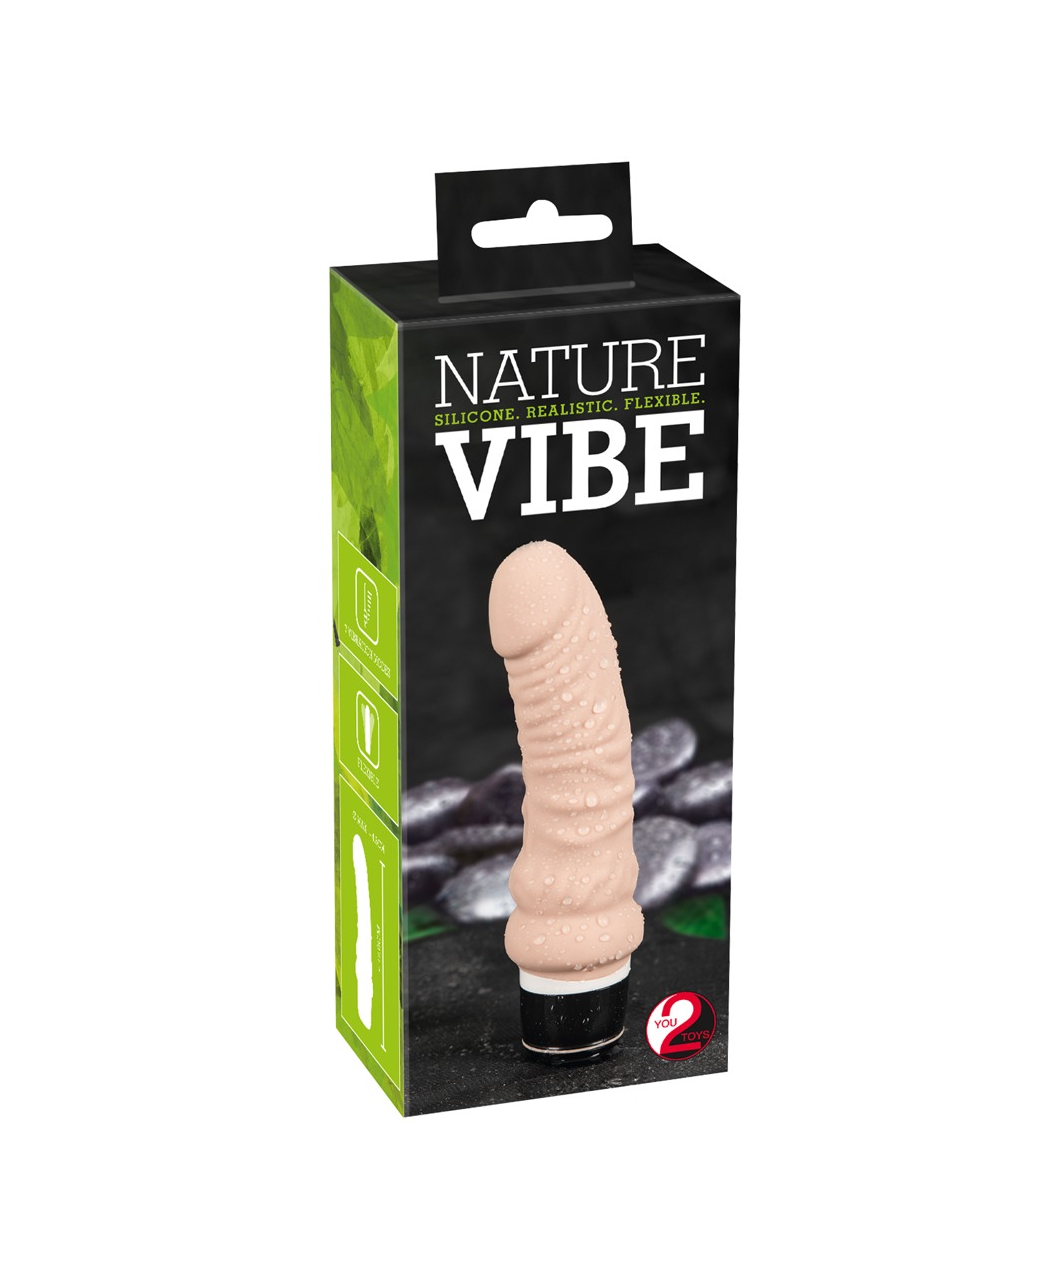 You2Toys Nature Vibe vibraator